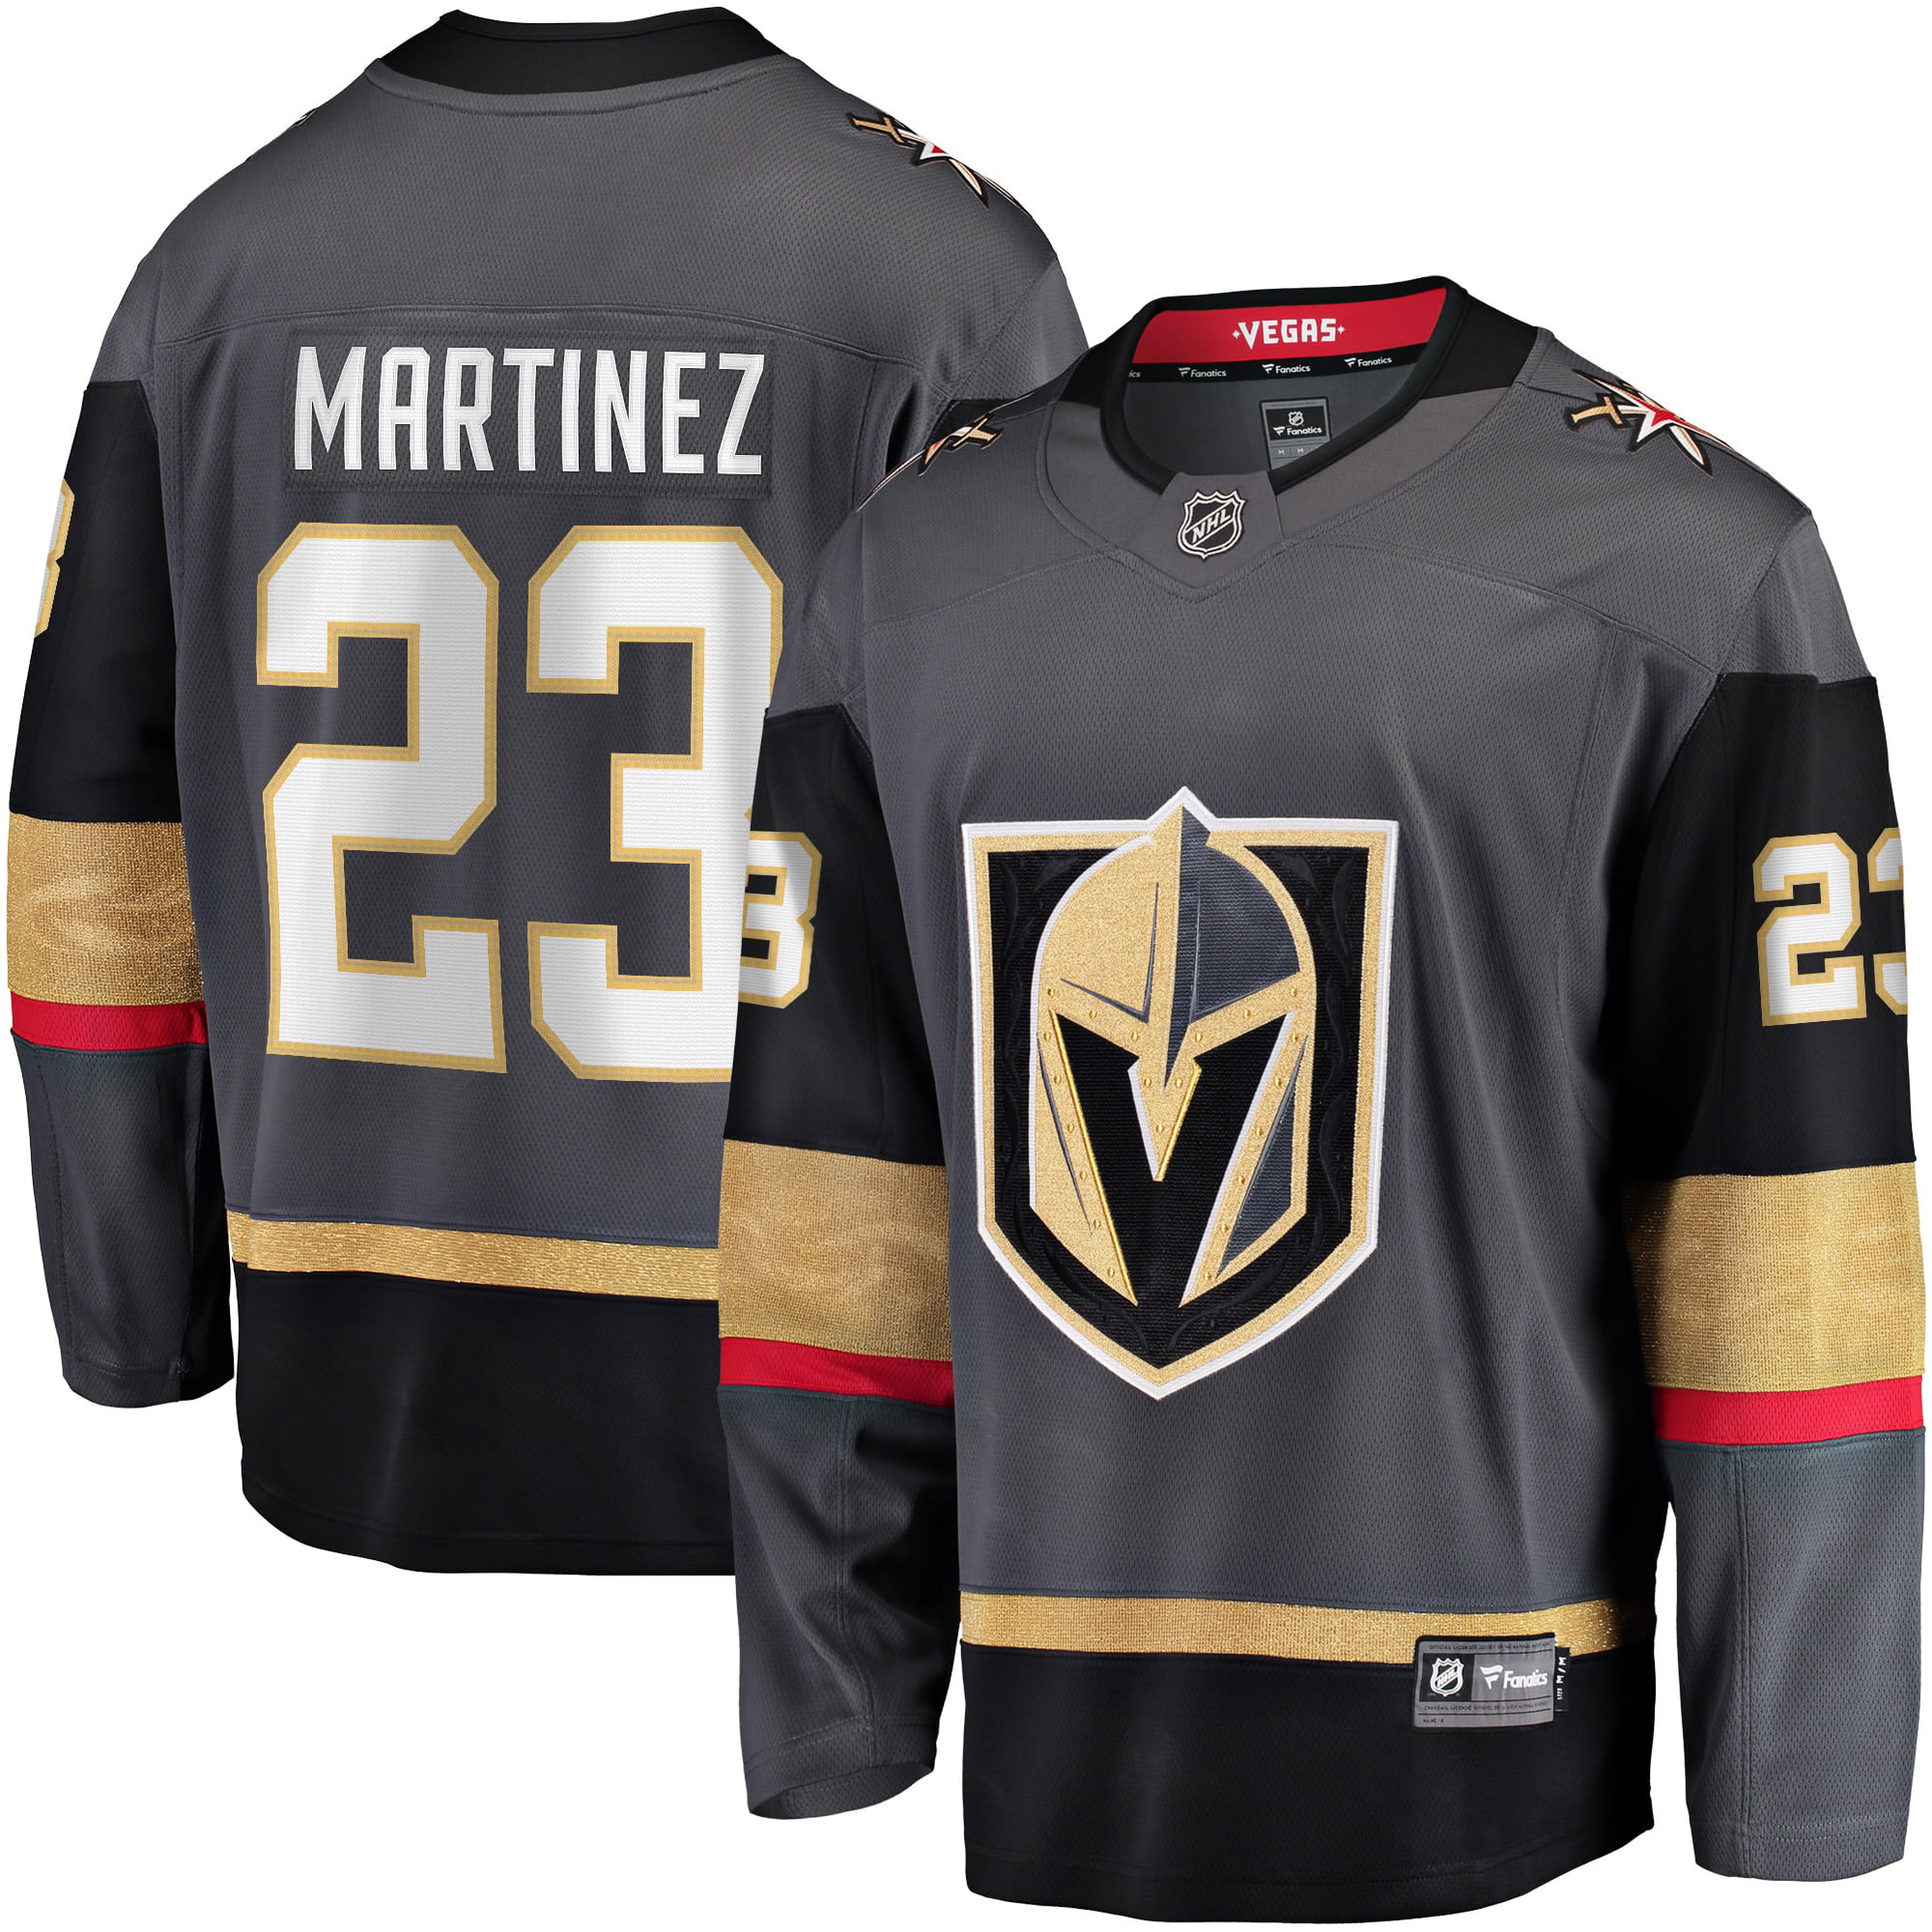 Martinez Blake replica jersey